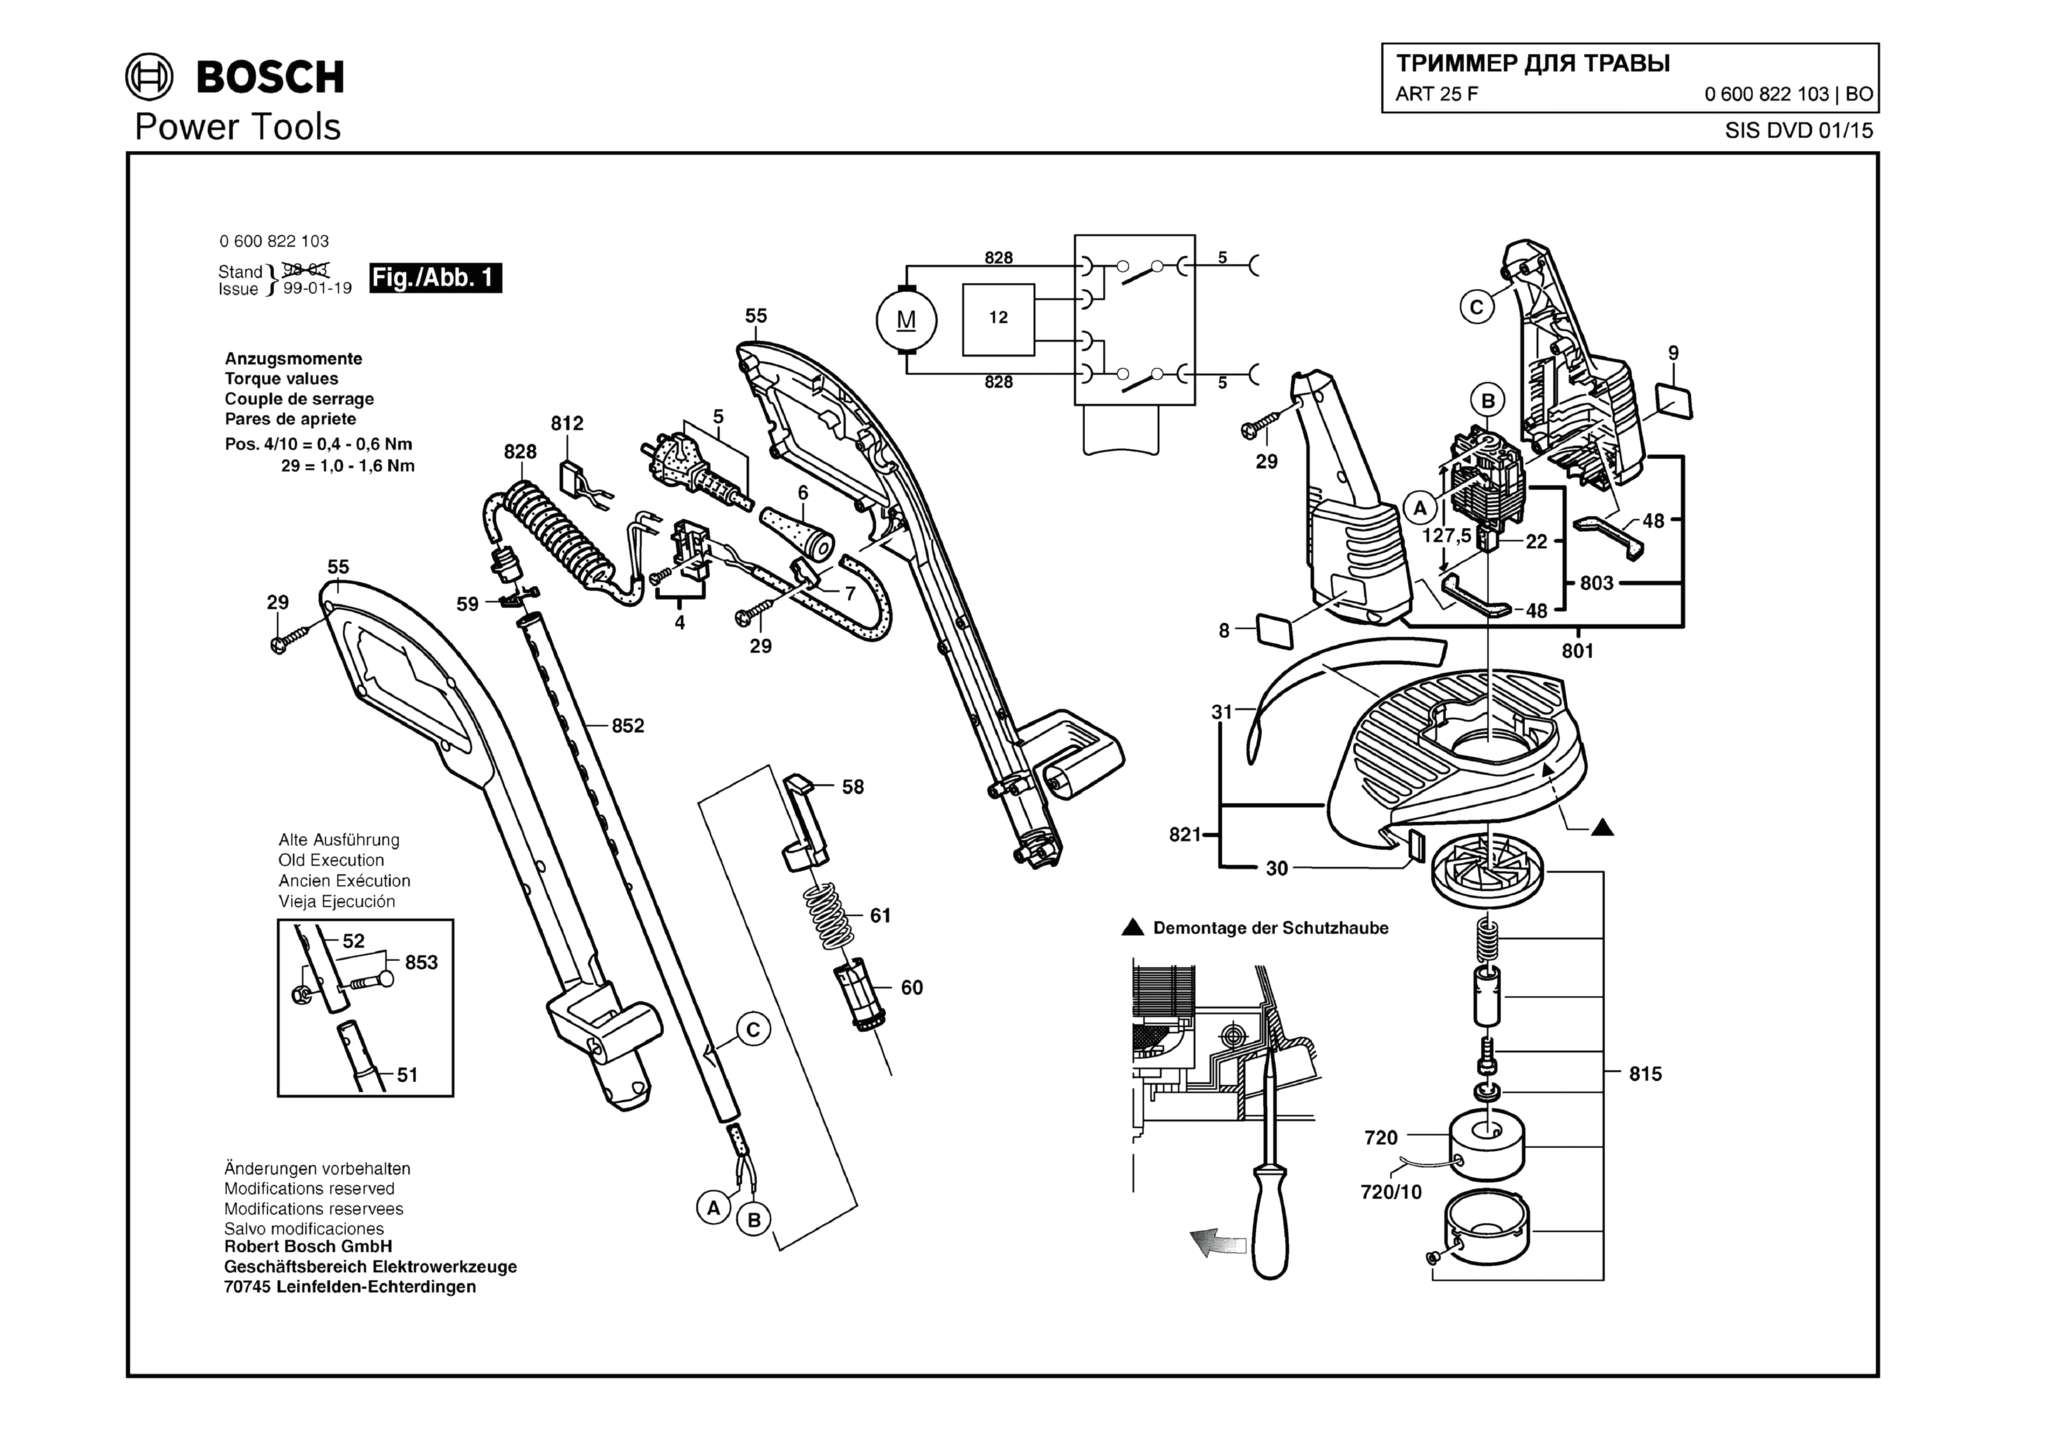 Запчасти, схема и деталировка Bosch ART 25 F (ТИП 0600822103)